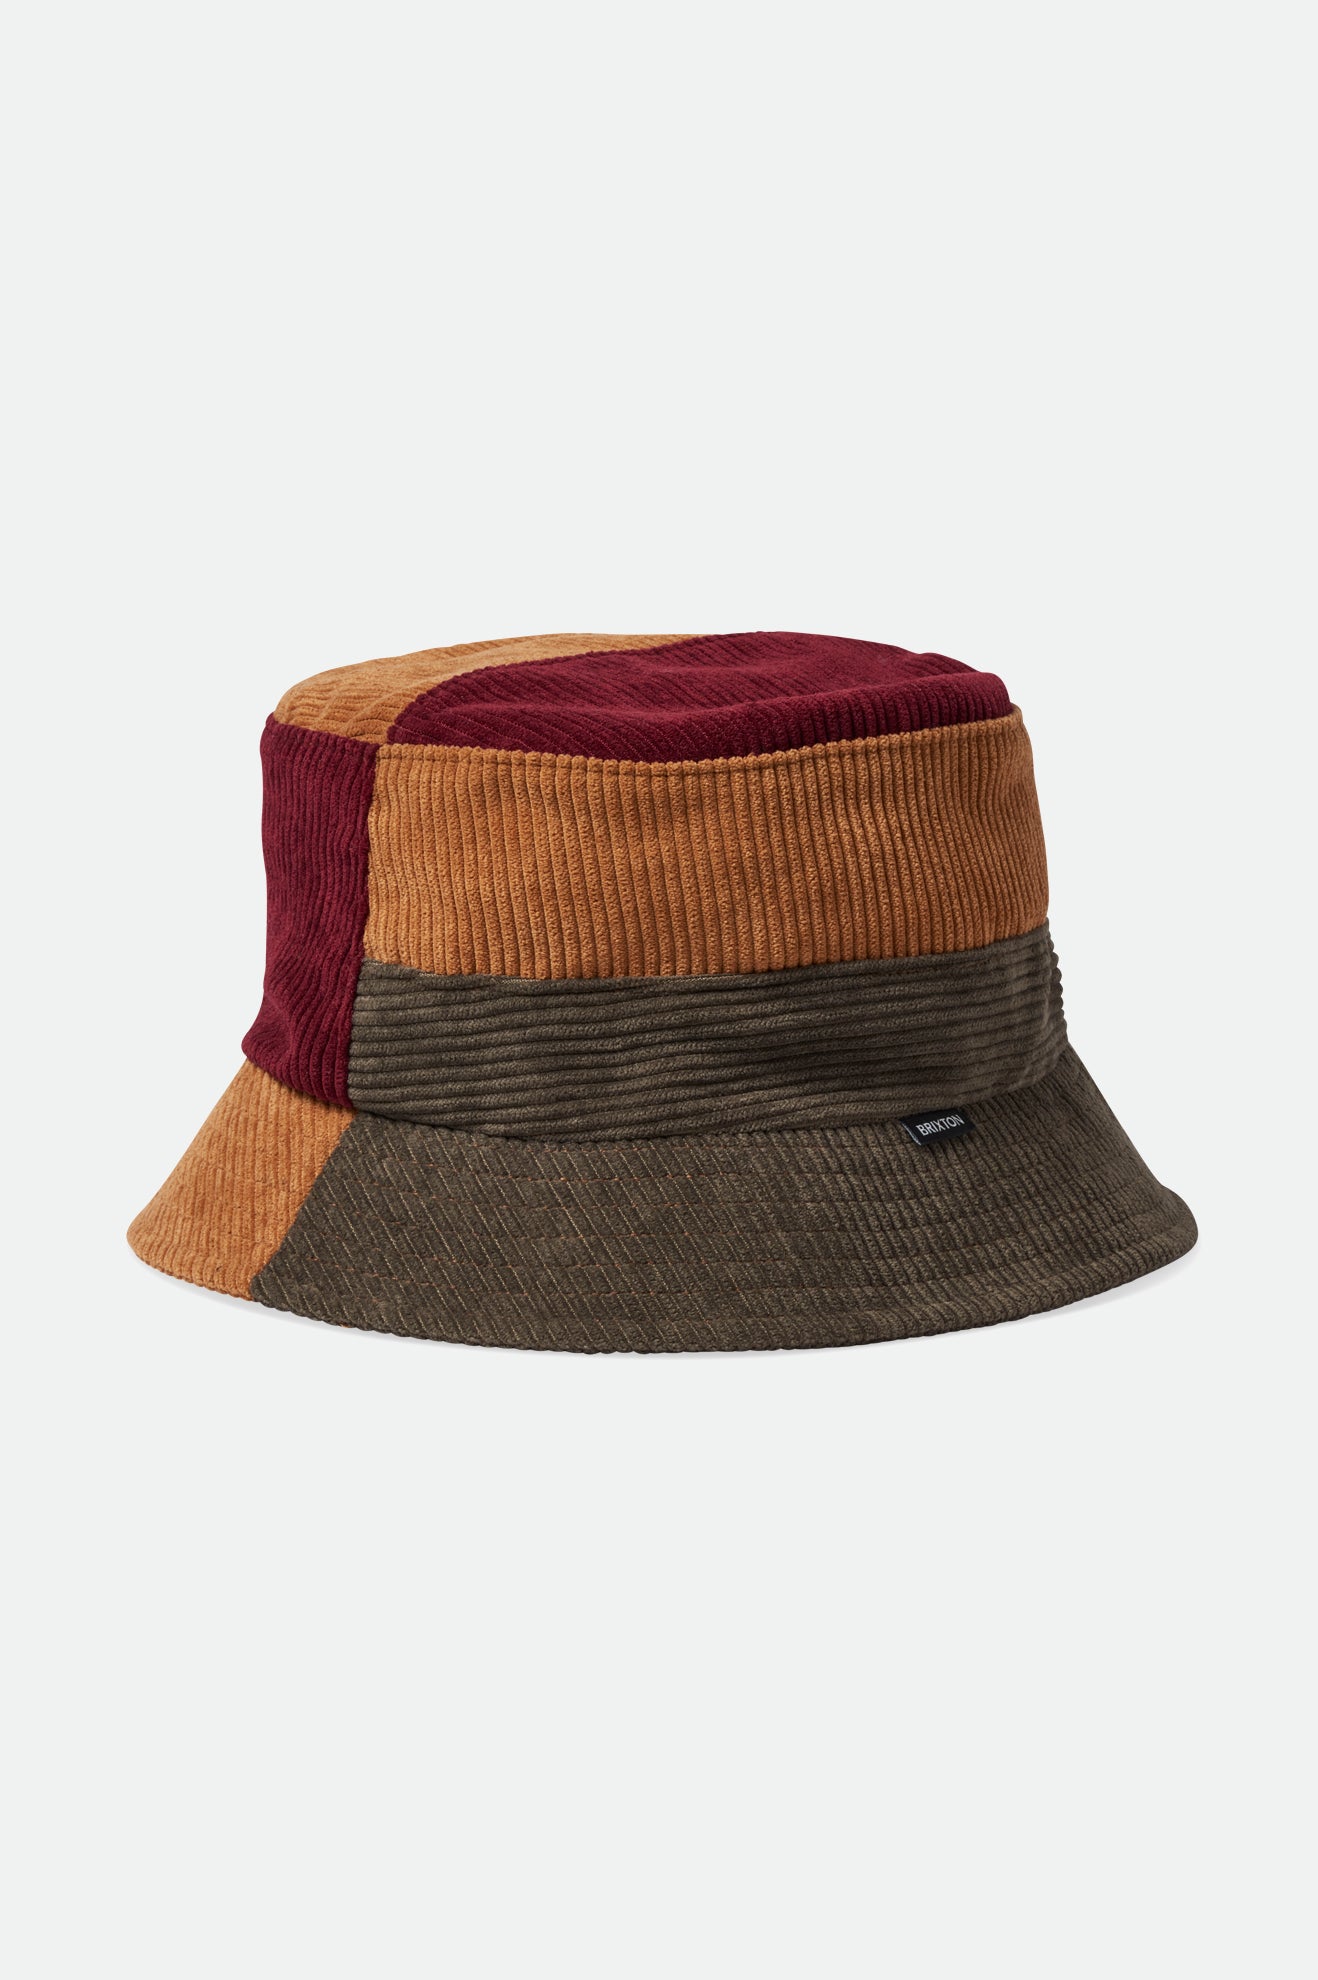 Gramercy Packable Bucket Hat - Dark Brick/Deep Brown/Medal Bronze